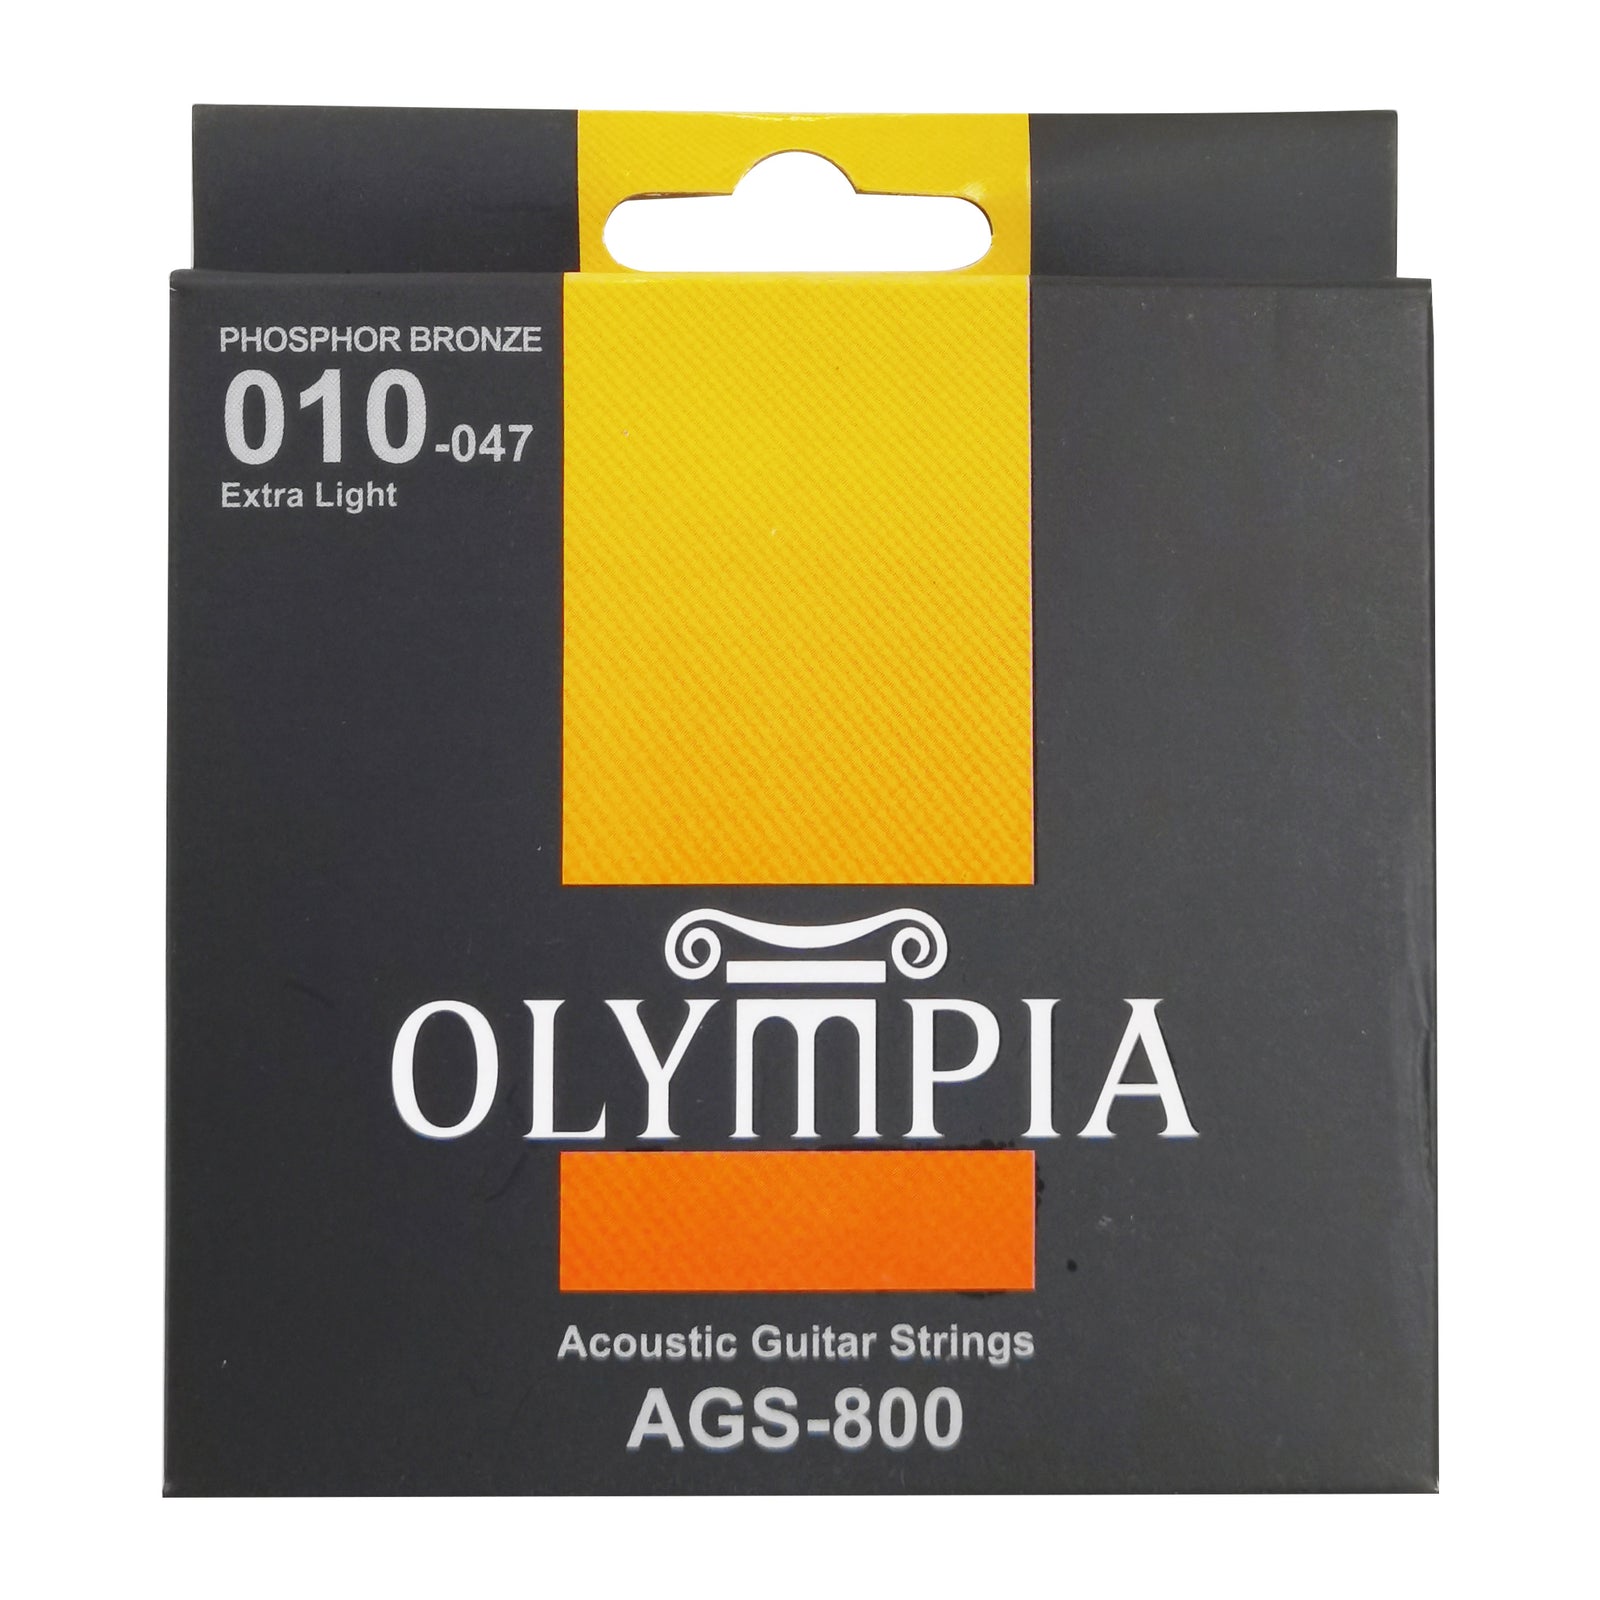 Olympia AGS 800 Acoustic Guitar Strings (010-047) Phosphor Bronze